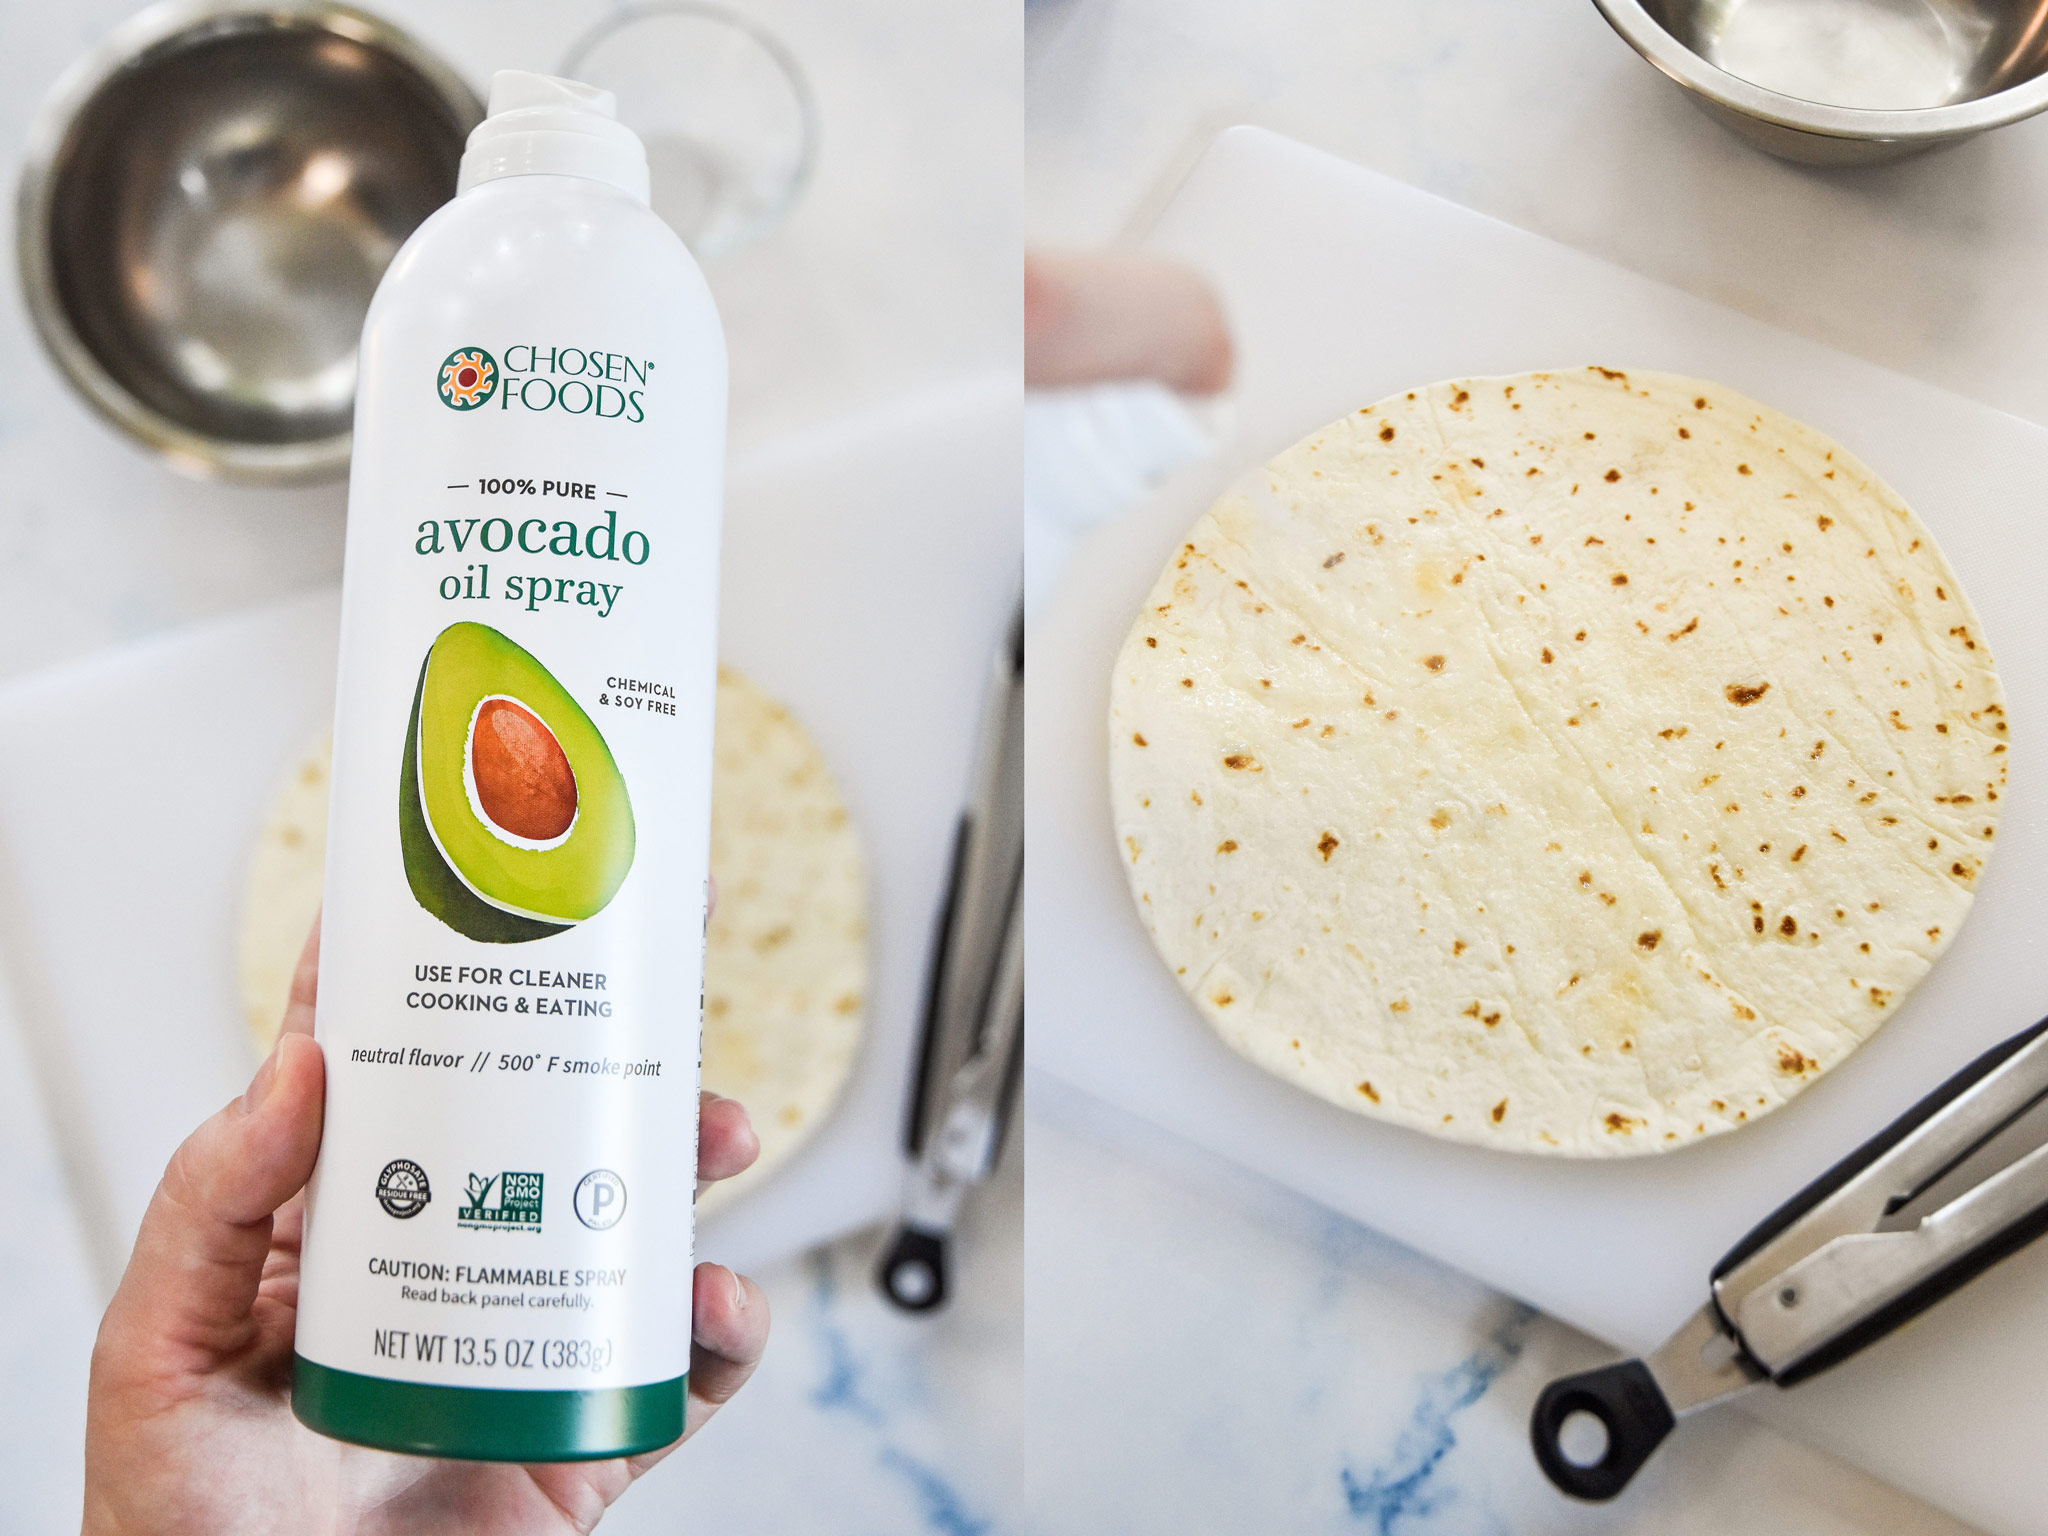 chosen foods avocado oil spray being sprayed onto a tortilla.